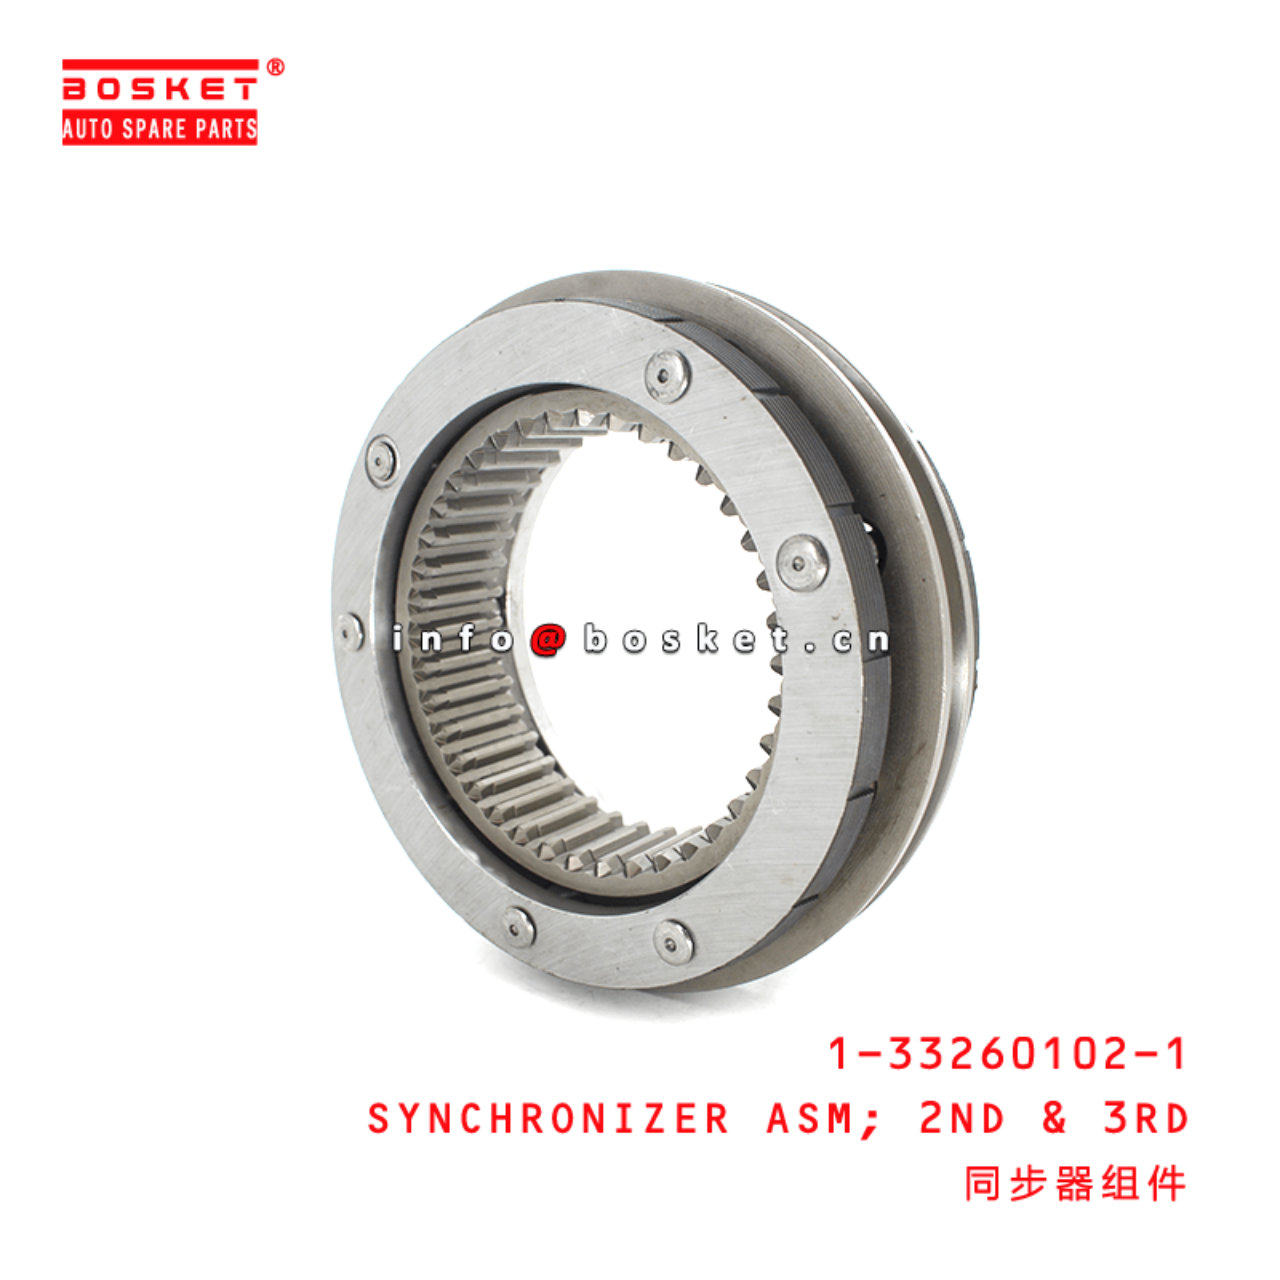 1-33260102-1 1332601021 Second & Third Synchronizer Assembly Suitable for ISUZU CXZ81 10PE1